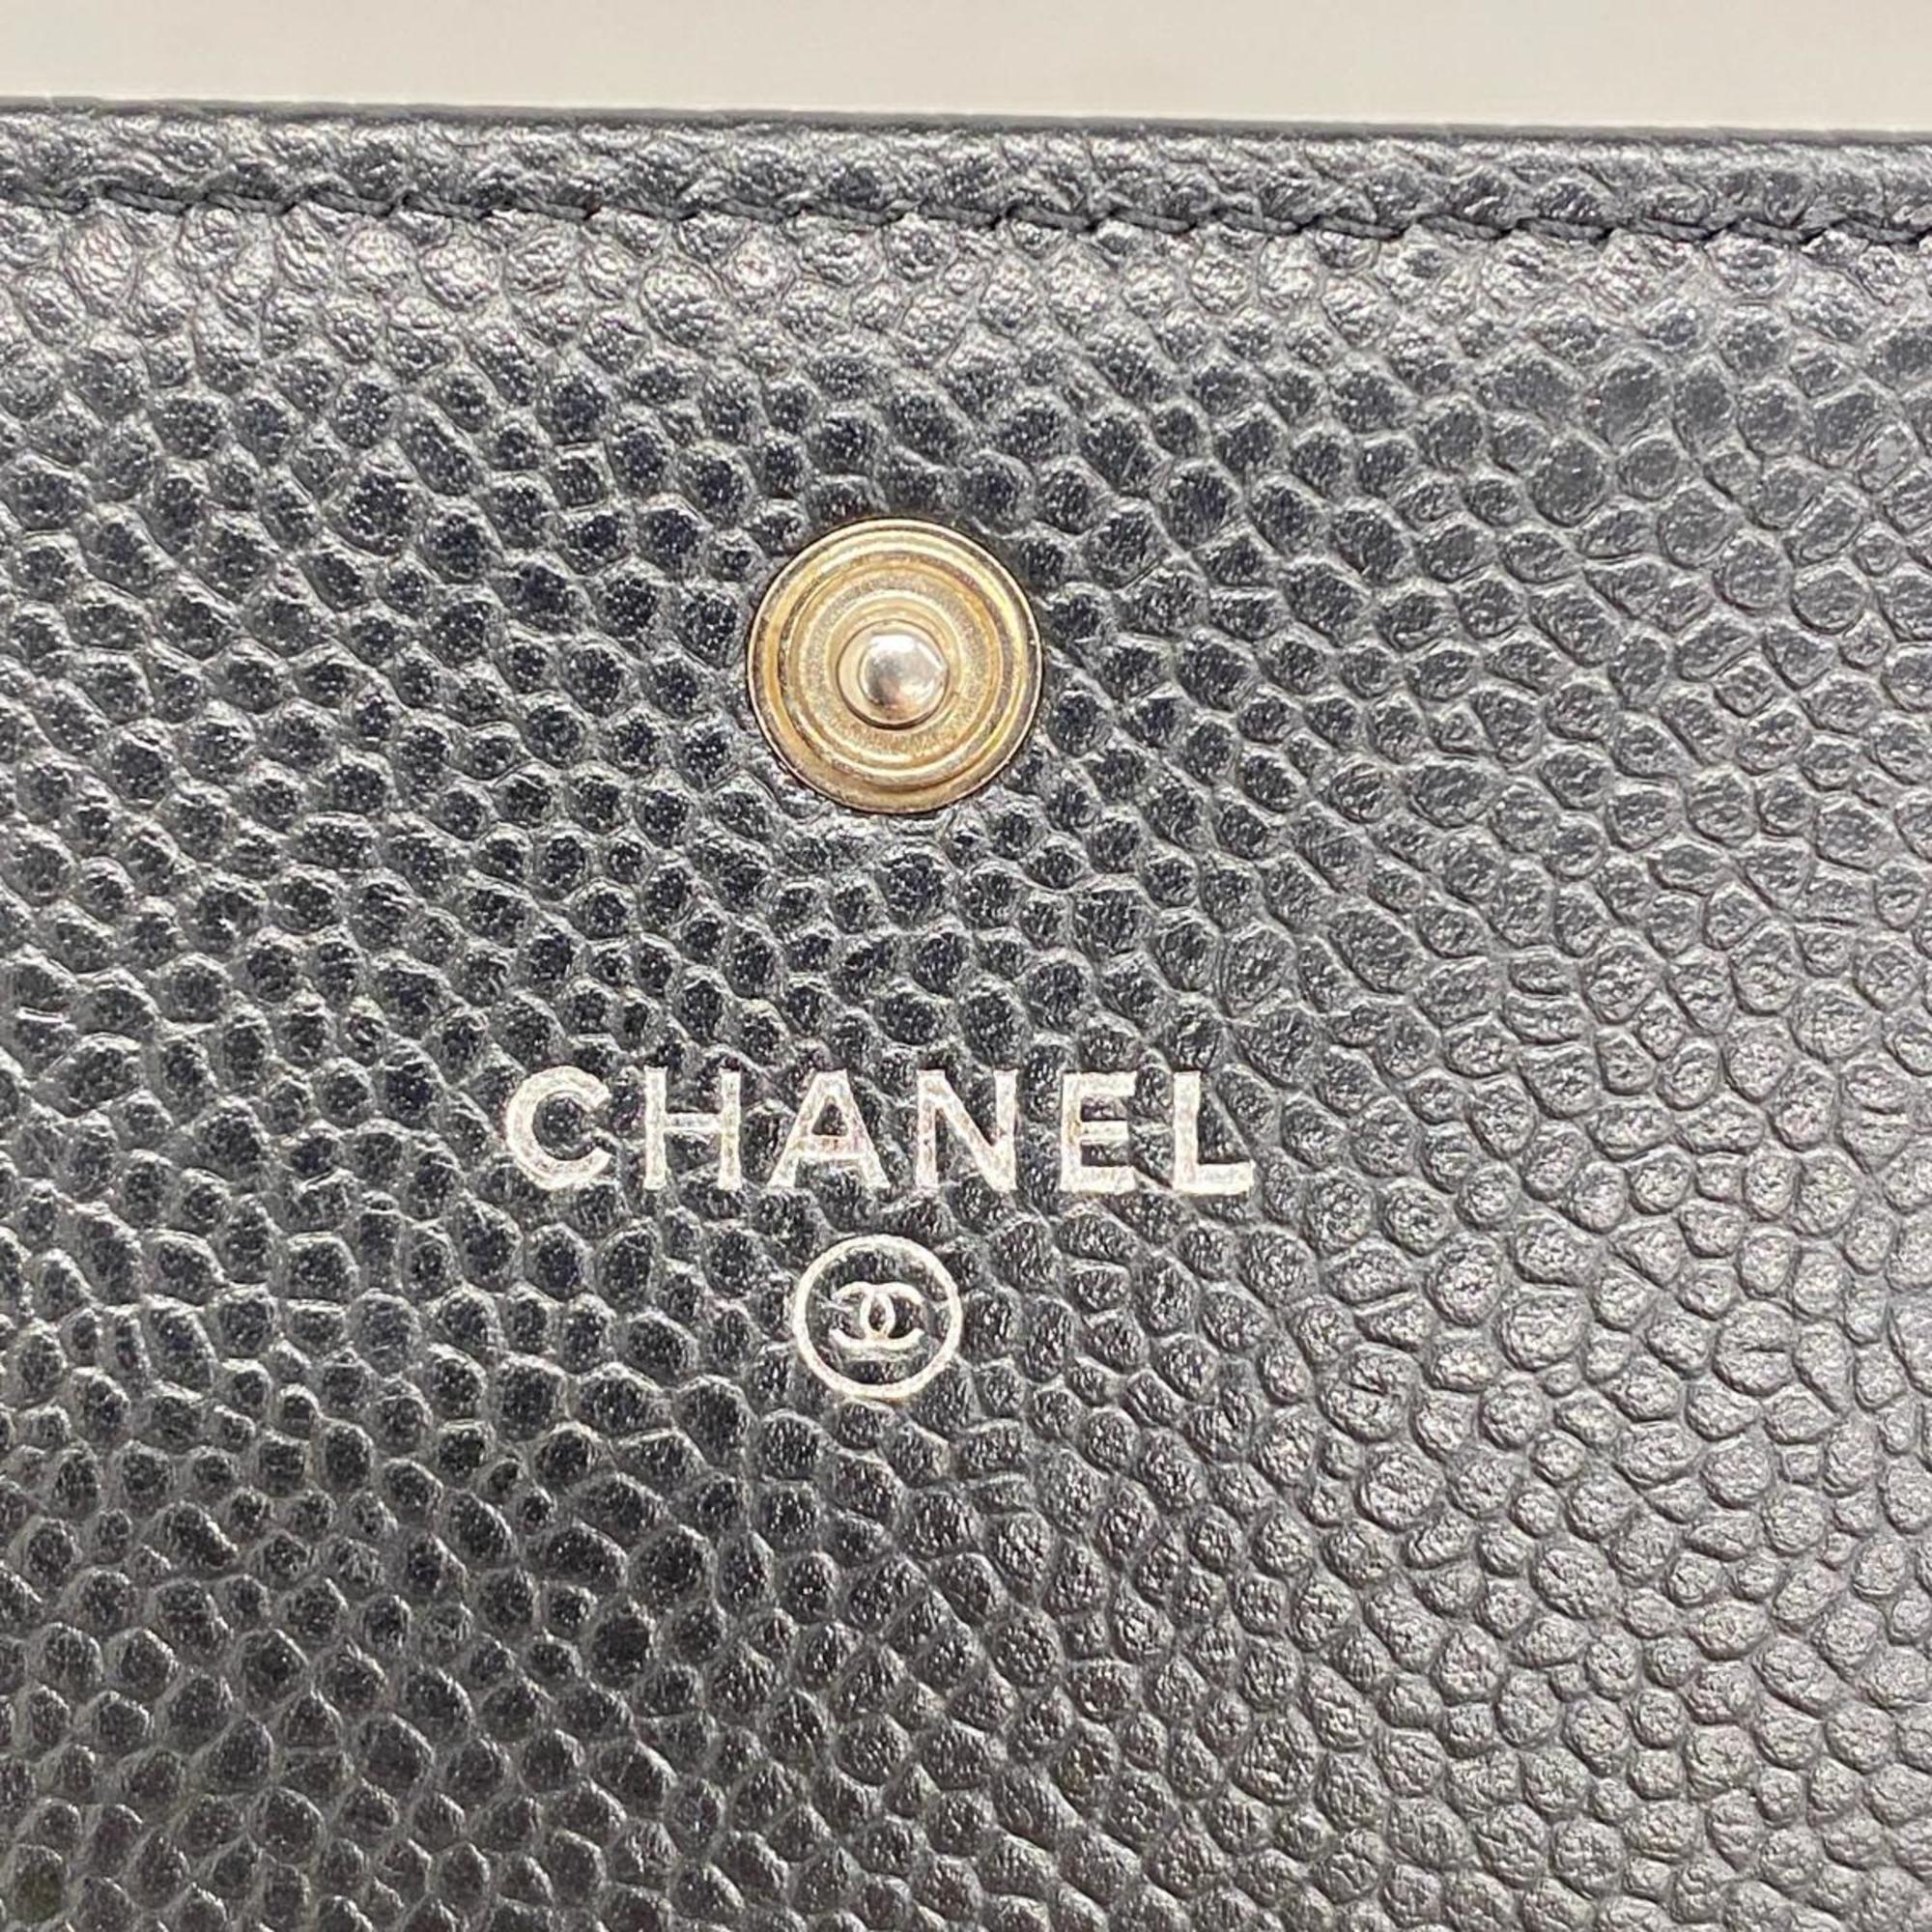 Chanel Long Wallet Caviar Skin Patent Leather Black Women's